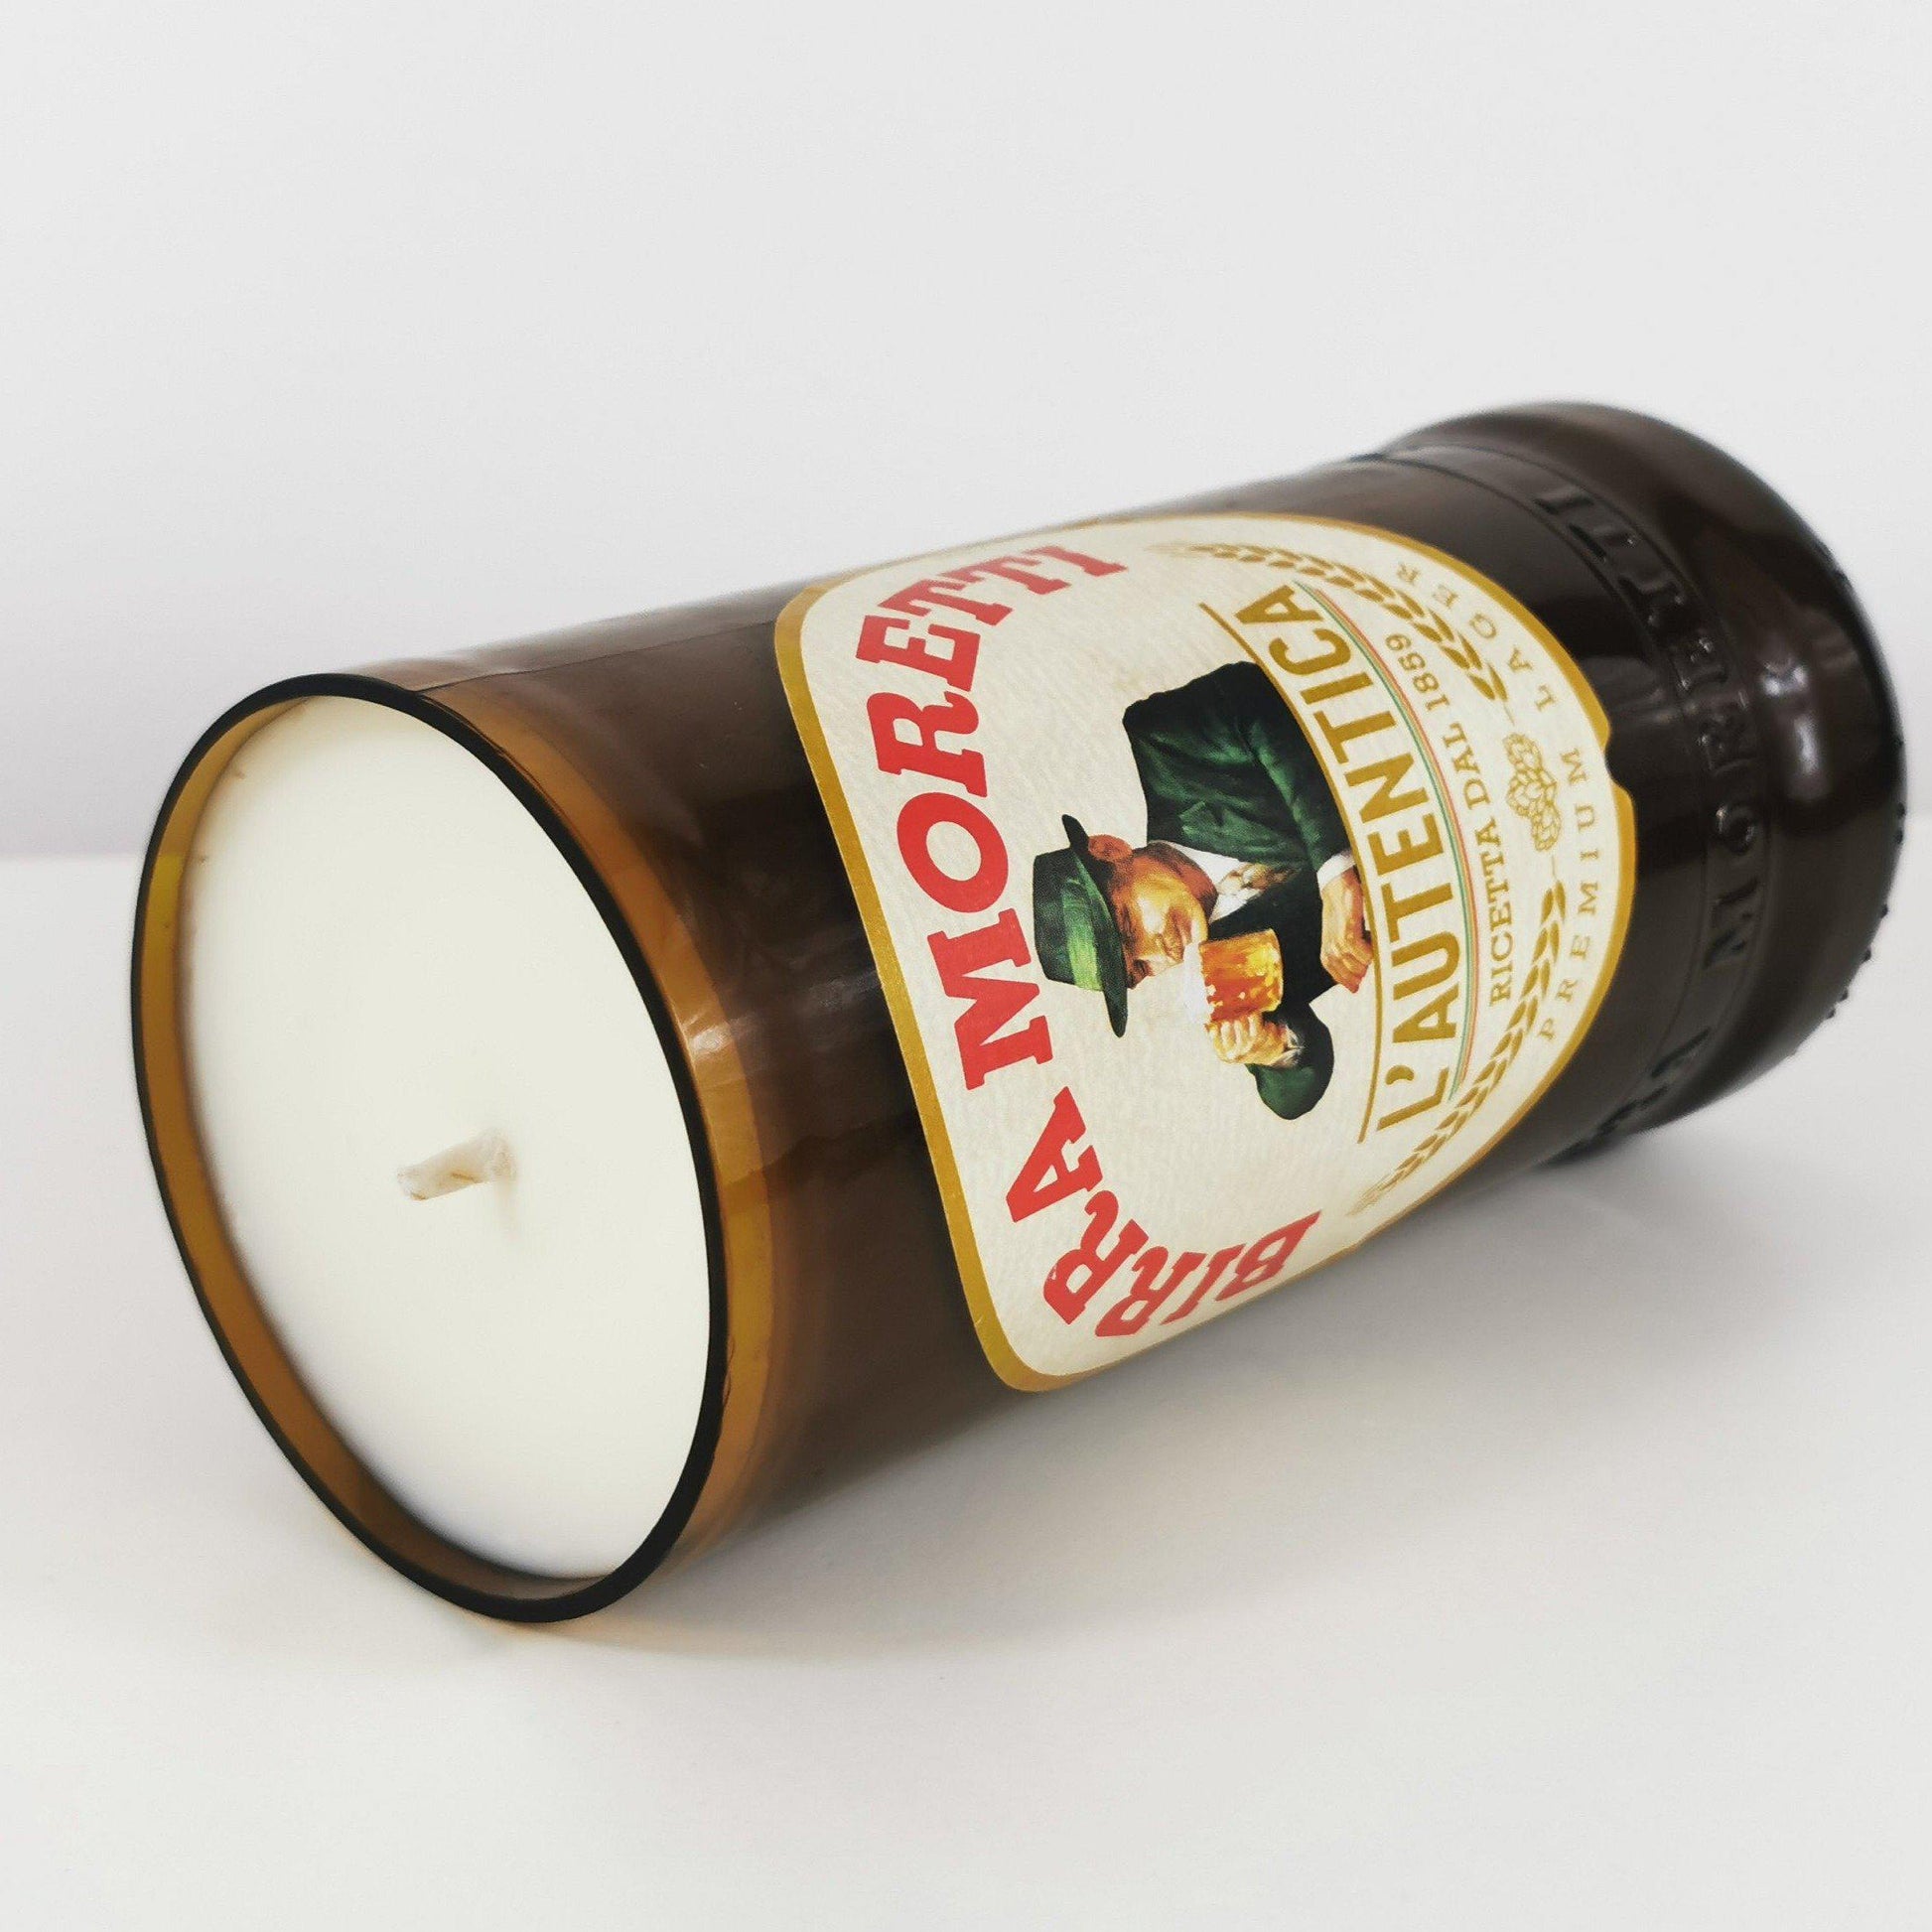 Birra Moretti Beer Bottle Candle Beer & Ale Bottle Candles Adhock Homeware